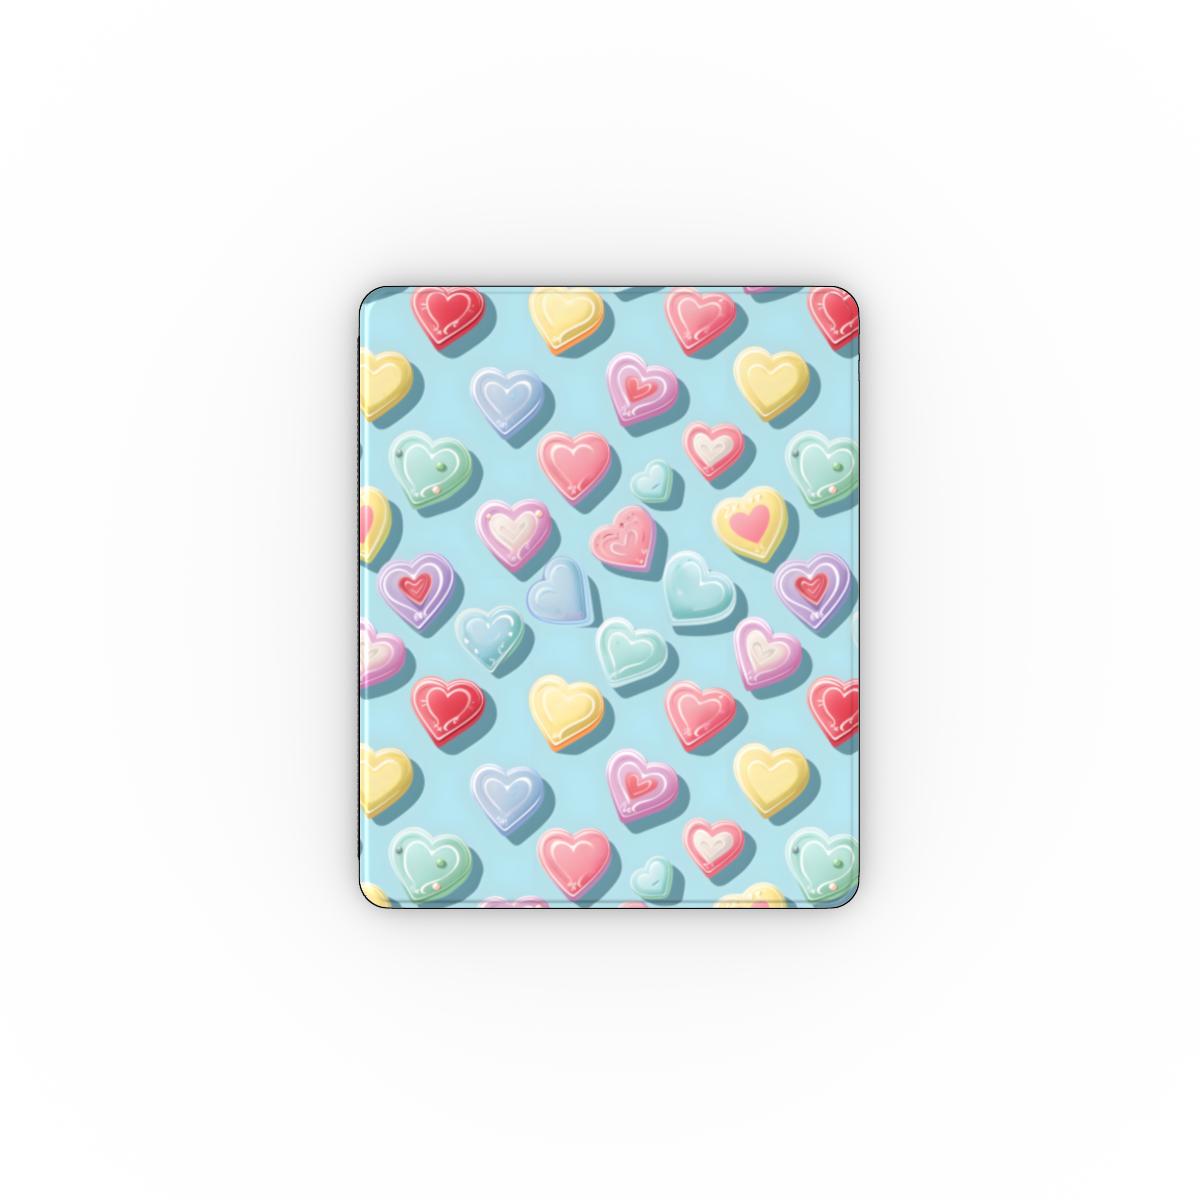 Candy Hearts: Cupid's Canvas - iPad Case